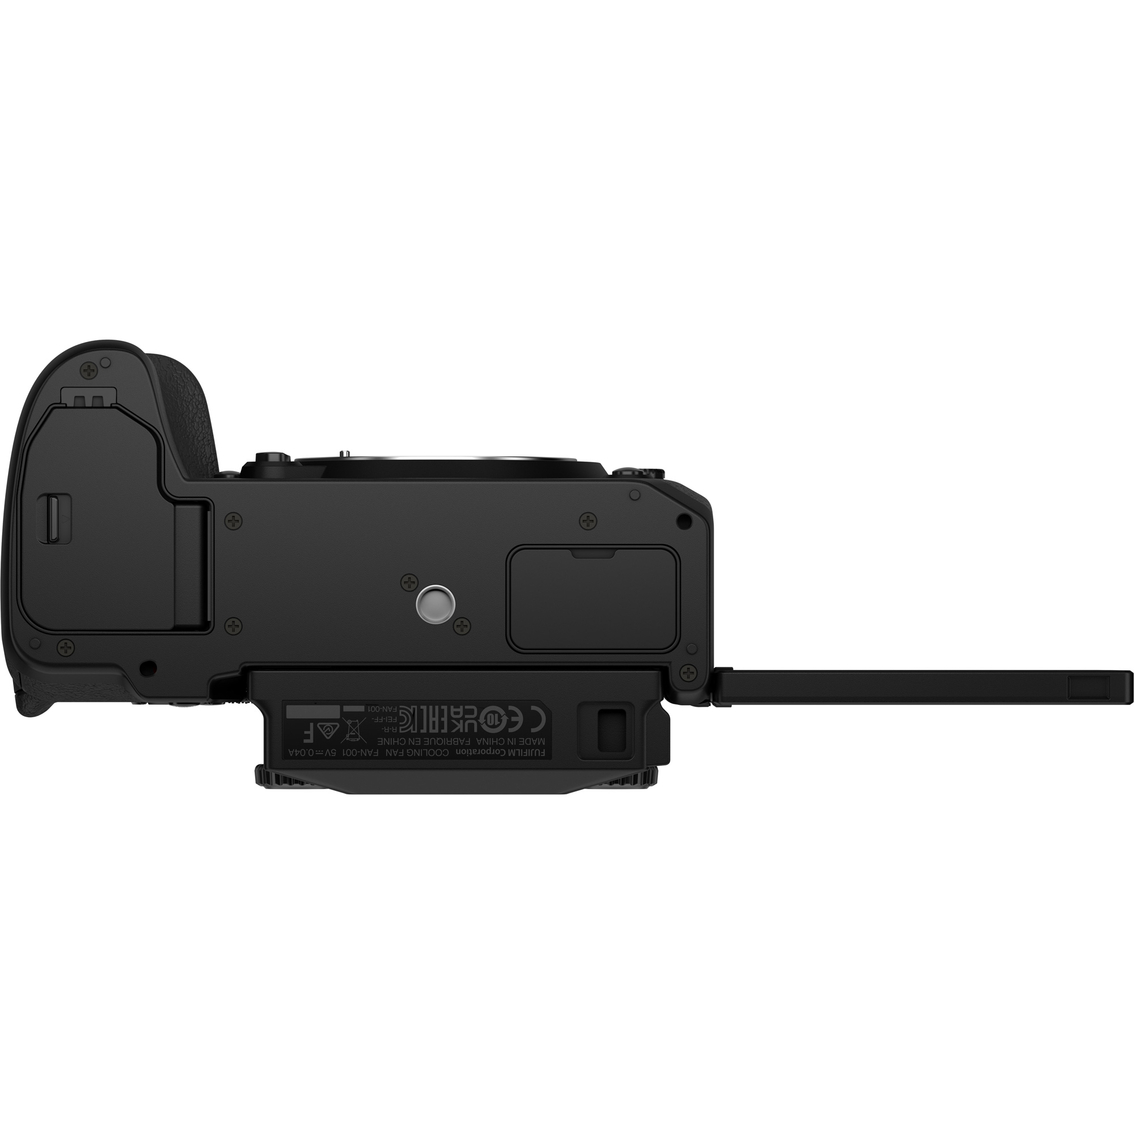 Fujifilm XH2S Camera Body, Black - Image 10 of 10